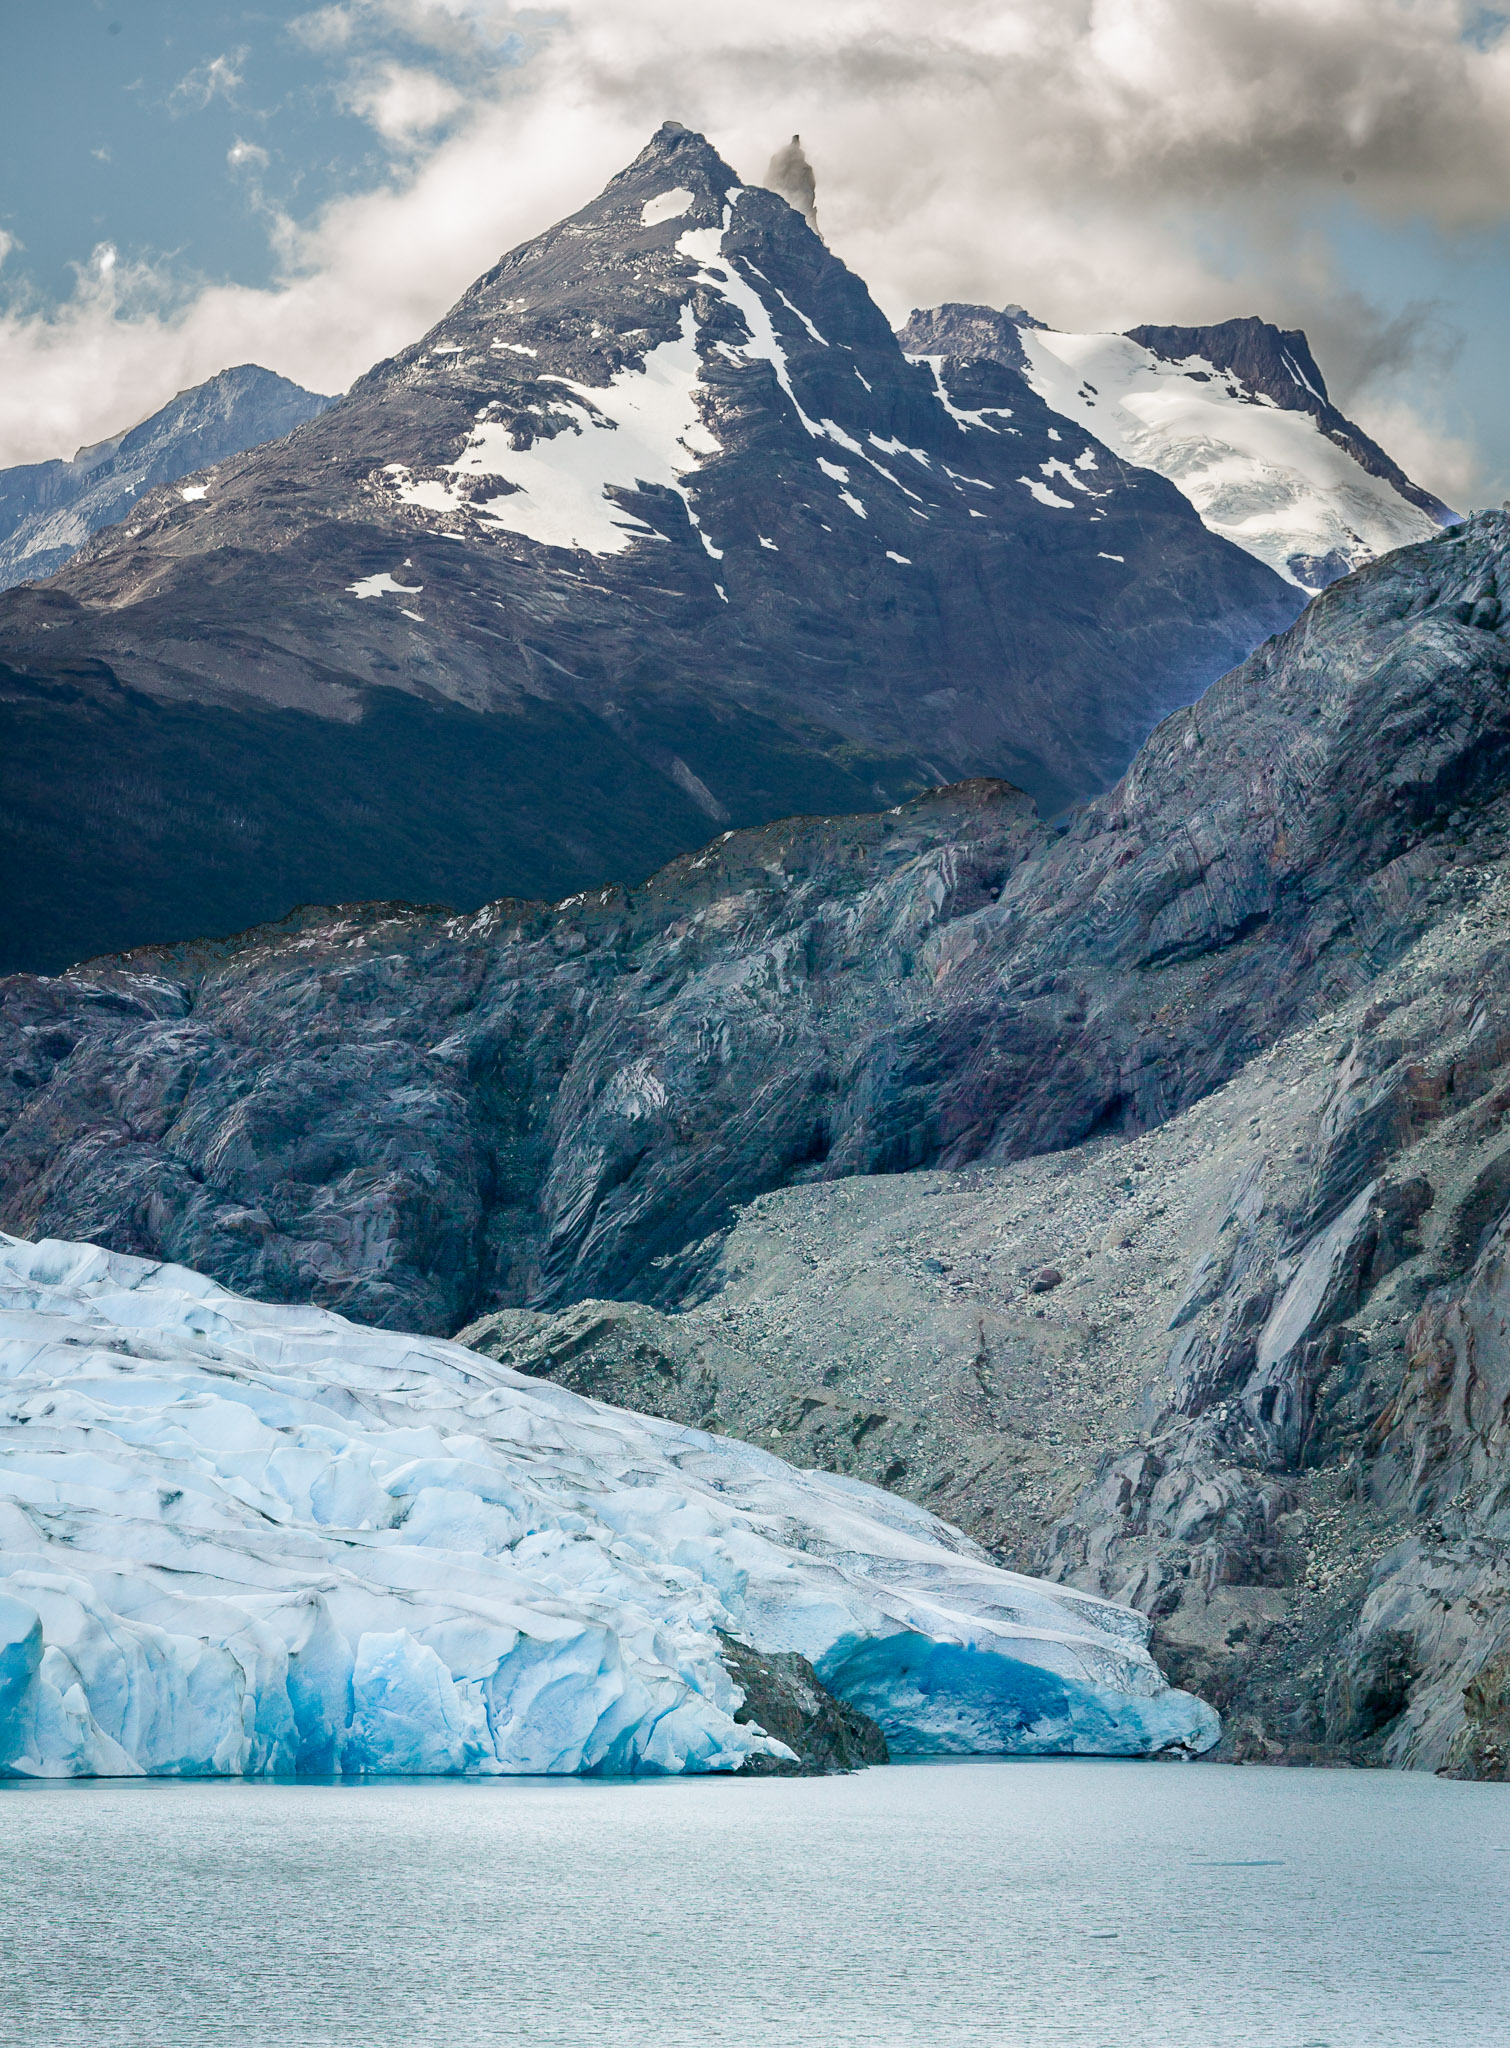 Glaciar Grey, Cerro Piramide in background